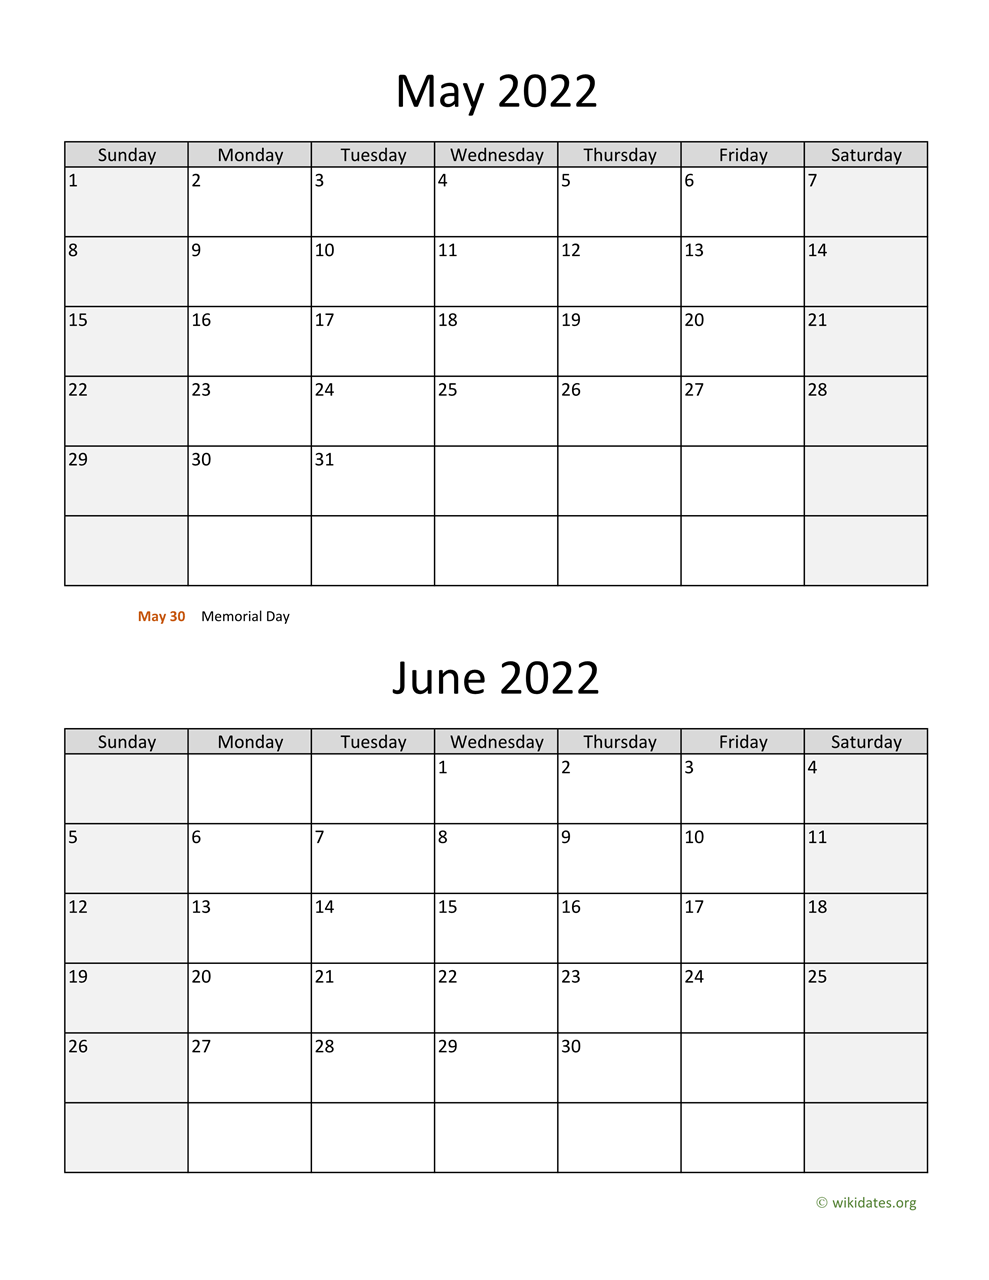 Free Printable Calendar 2022 May And June.May And June 2022 Calendar Wikidates Org